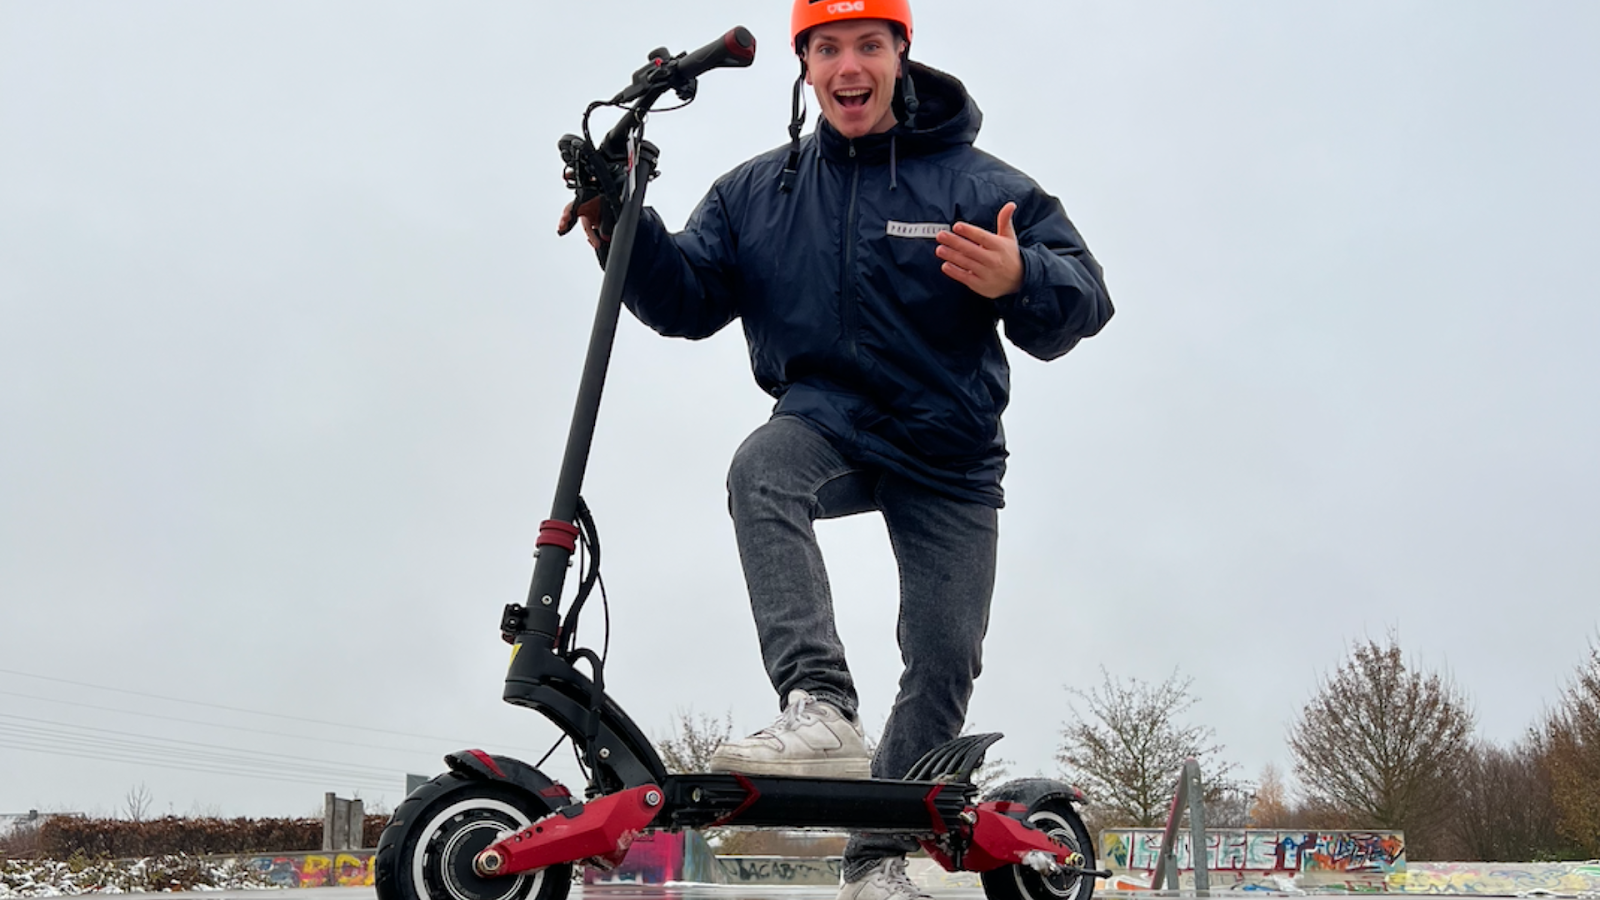 Varla al terrain electric sscooter